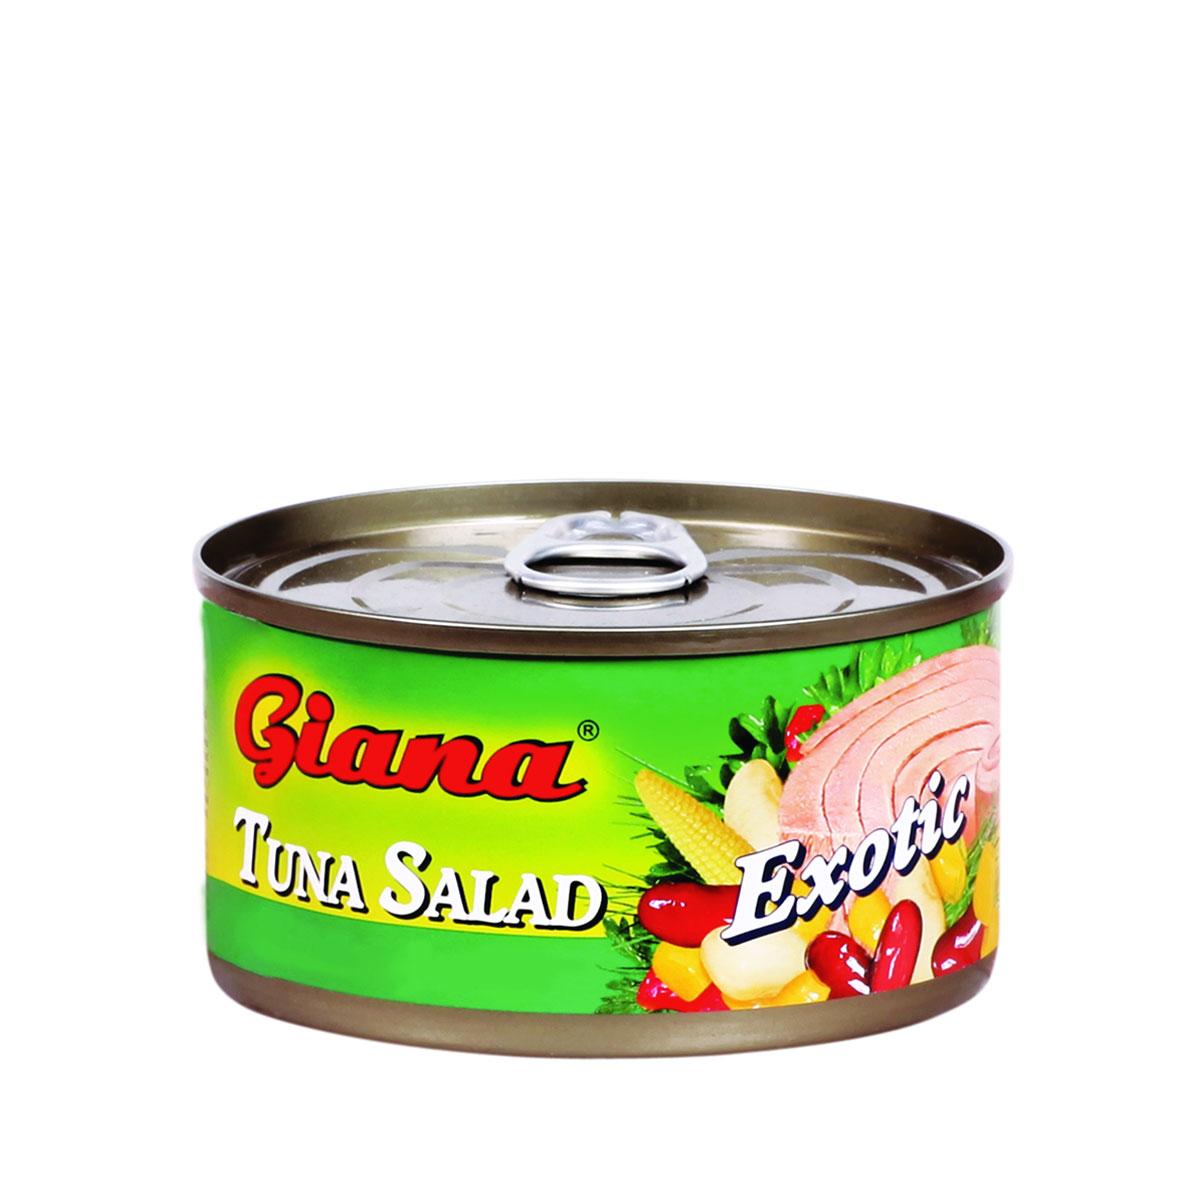 Selected image for GIANA Tuna Exotic salata 185g